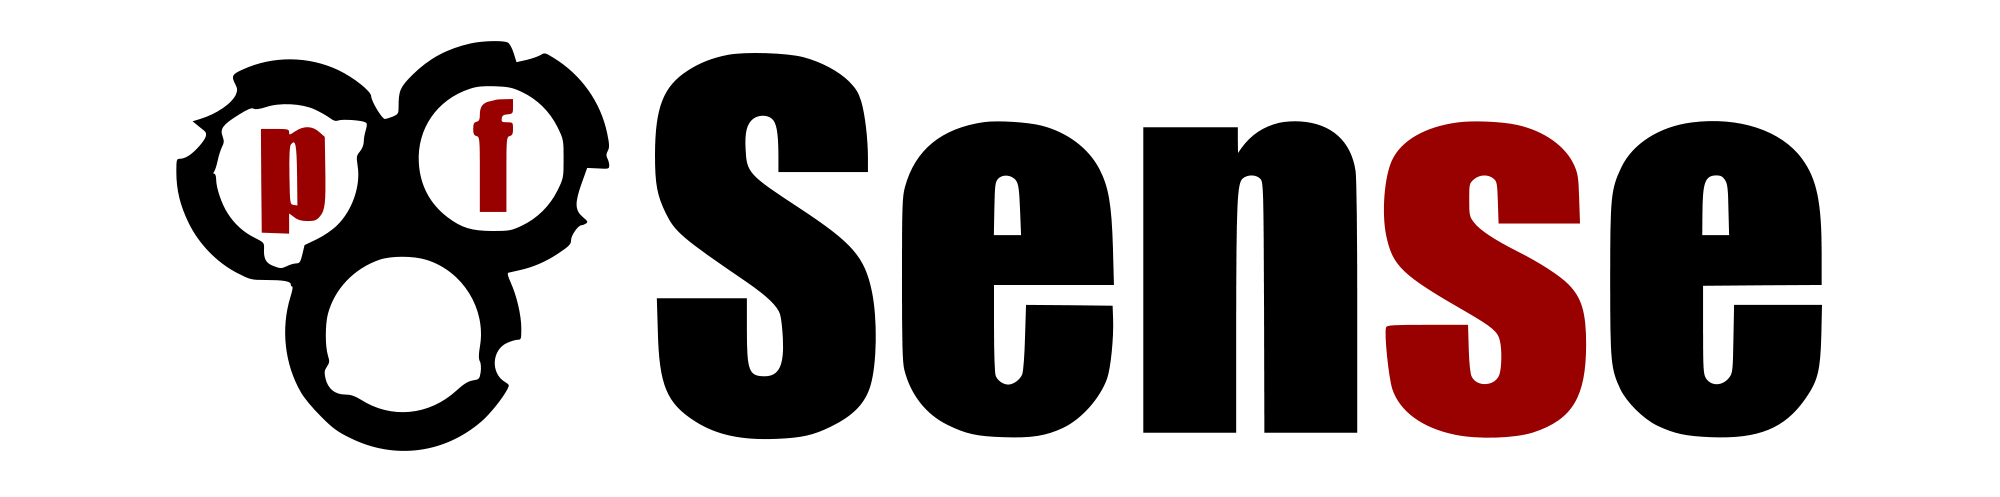 2000px-pfs-logo-vector.svg_.png